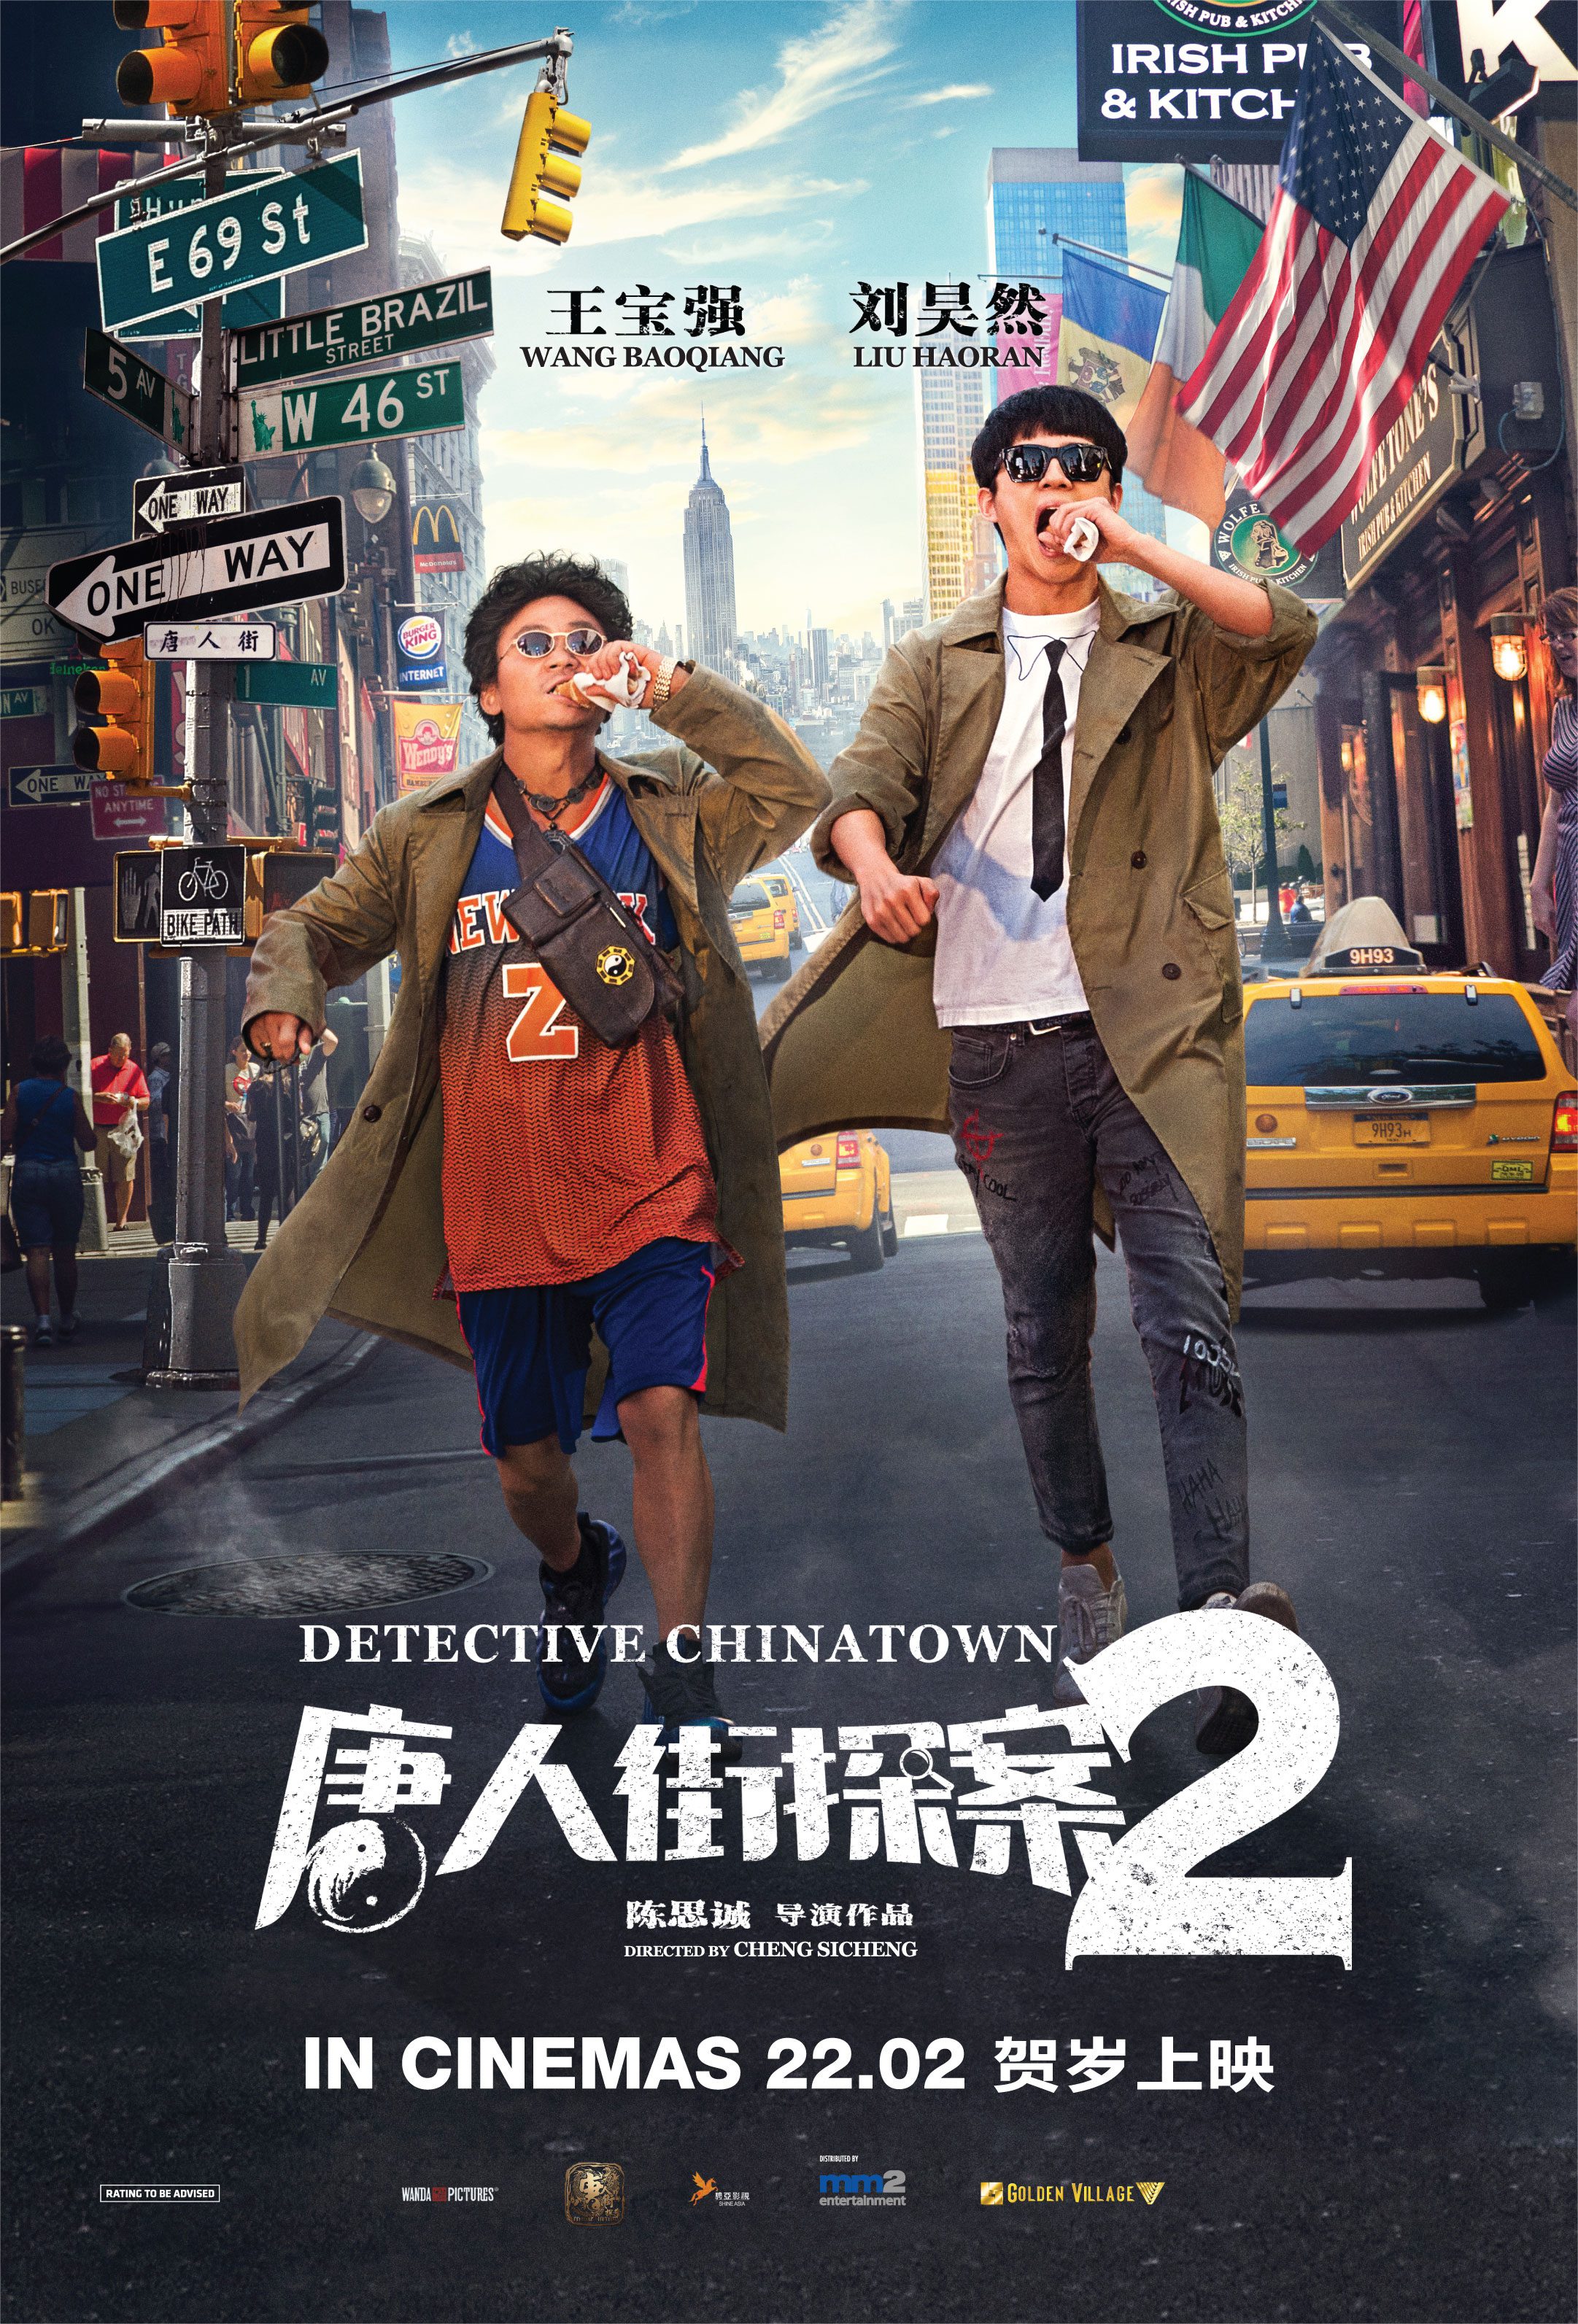 Detective Chinatown 2 (Golden Village Pictures)